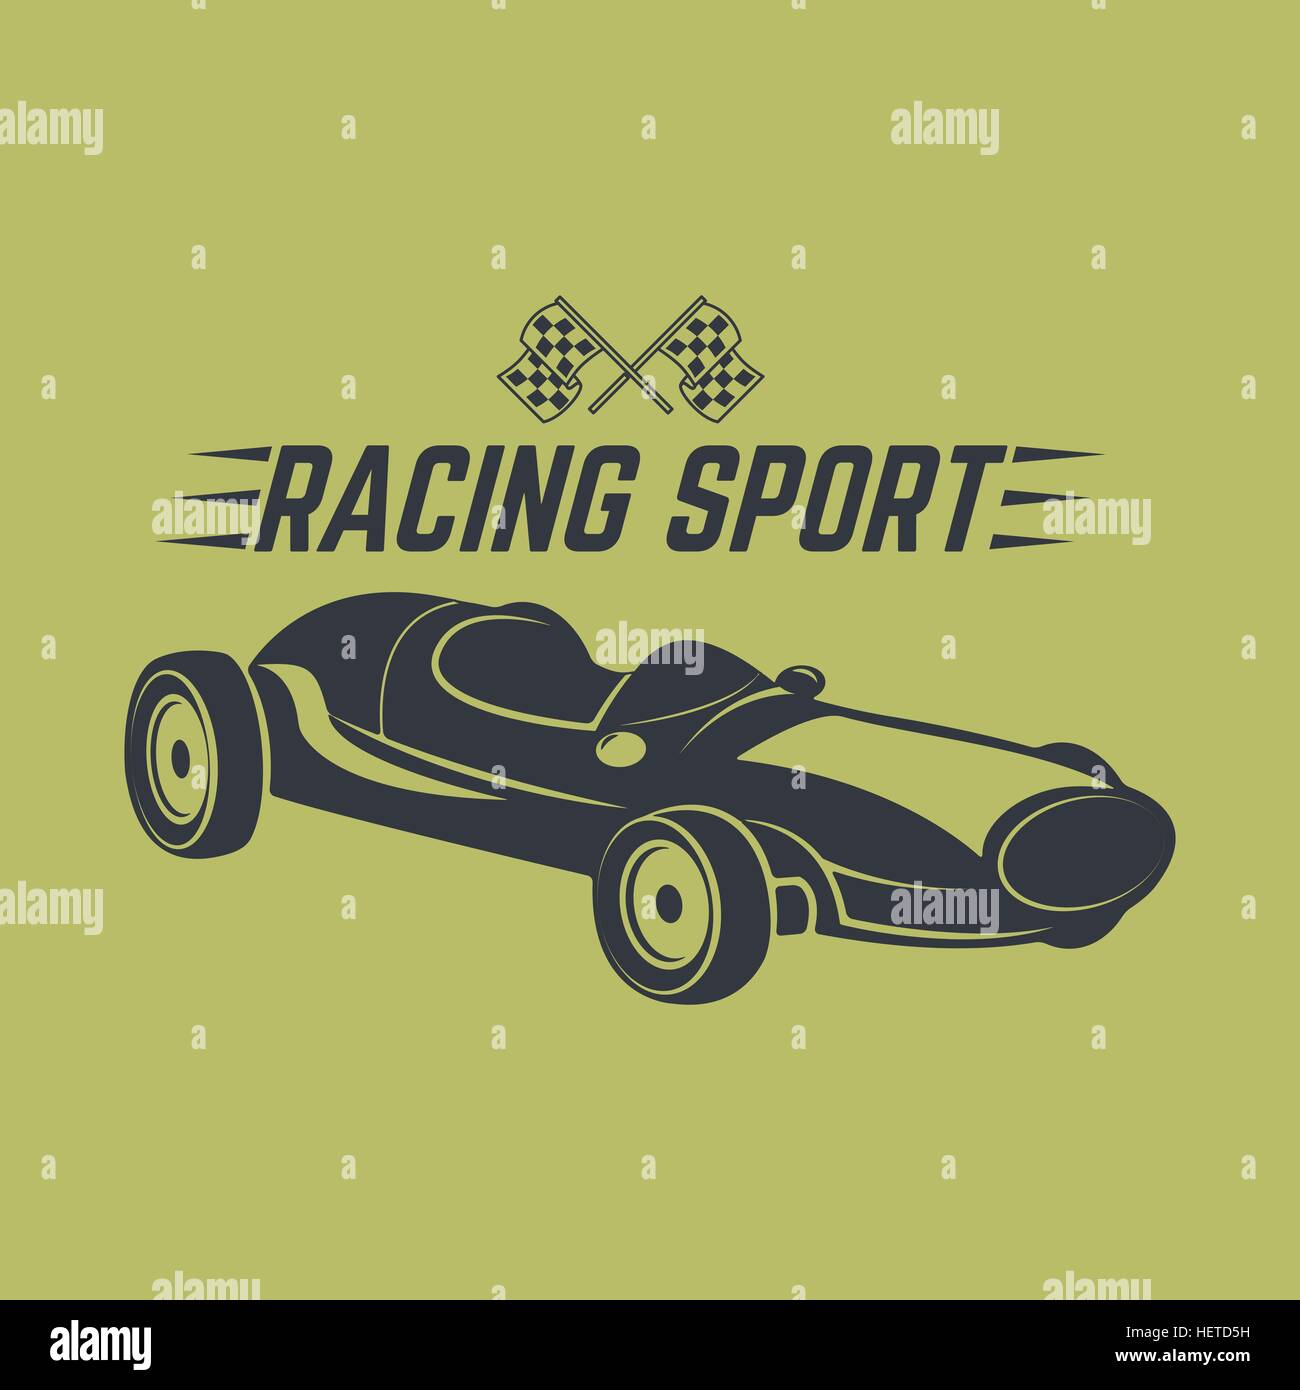 Racing car illustration. Stock Vector